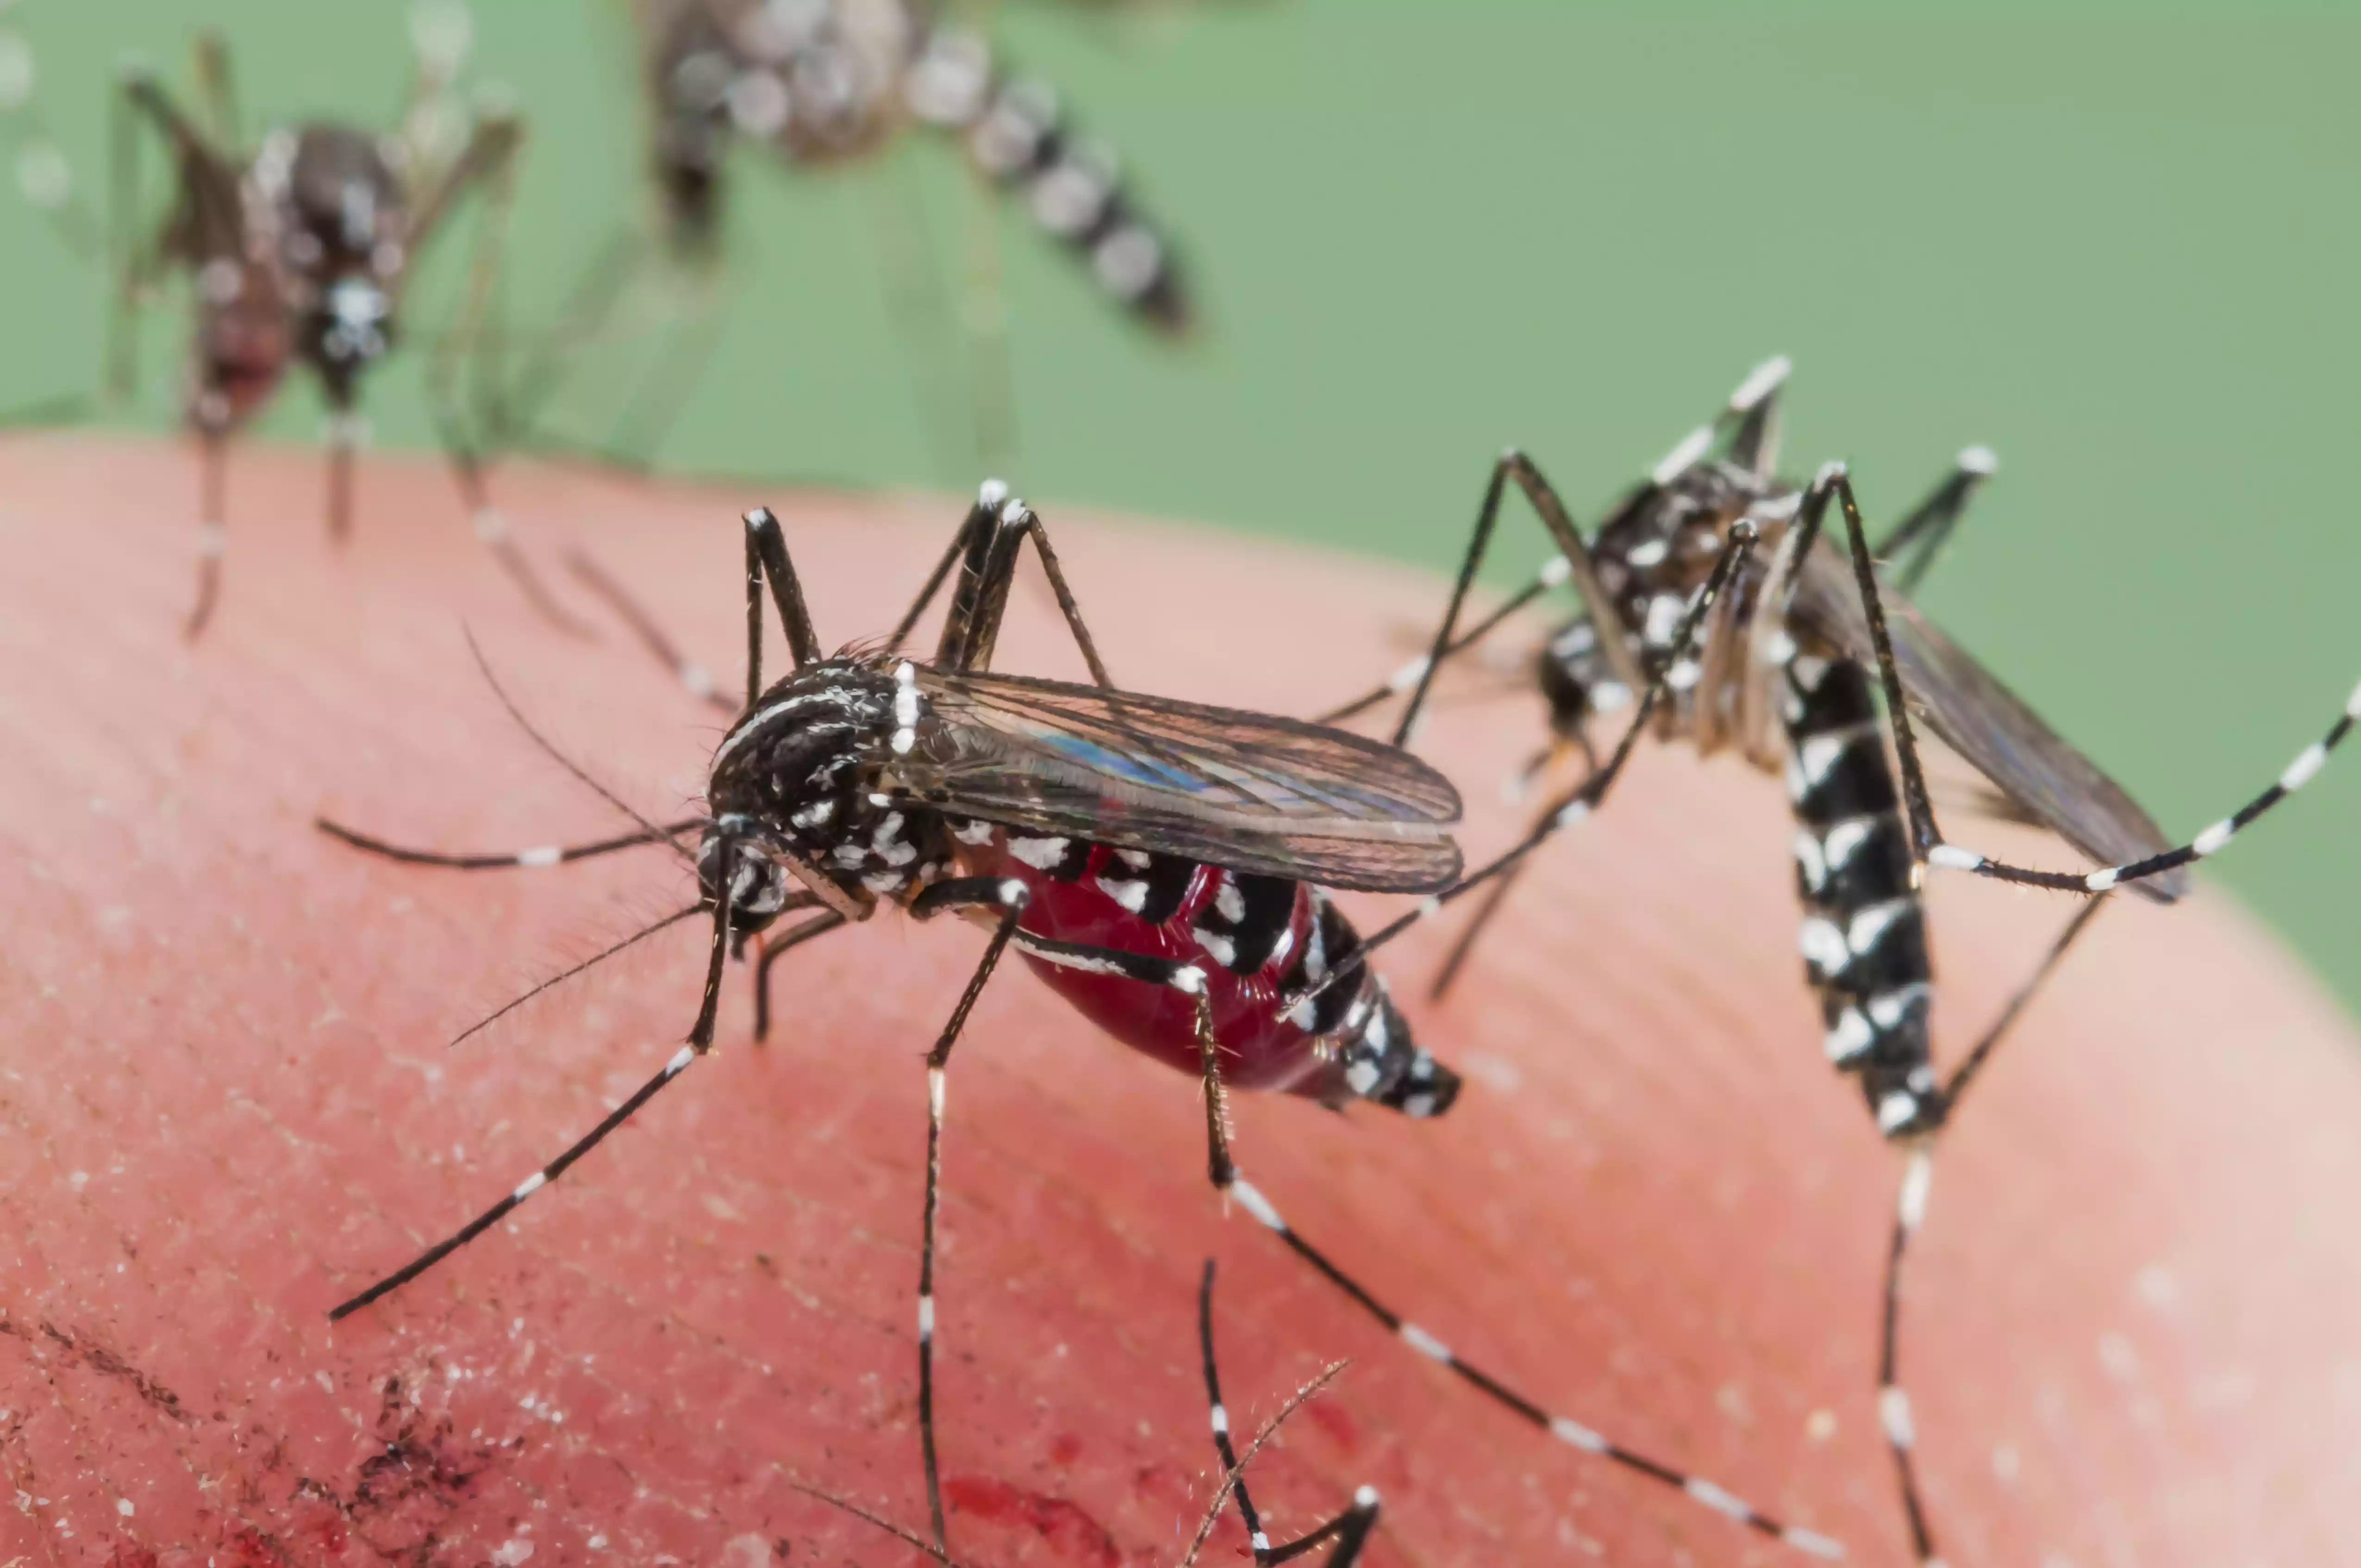 Sumber gambar : https://www.verywellhealth.com/mosquito-borne-diseases-3572796